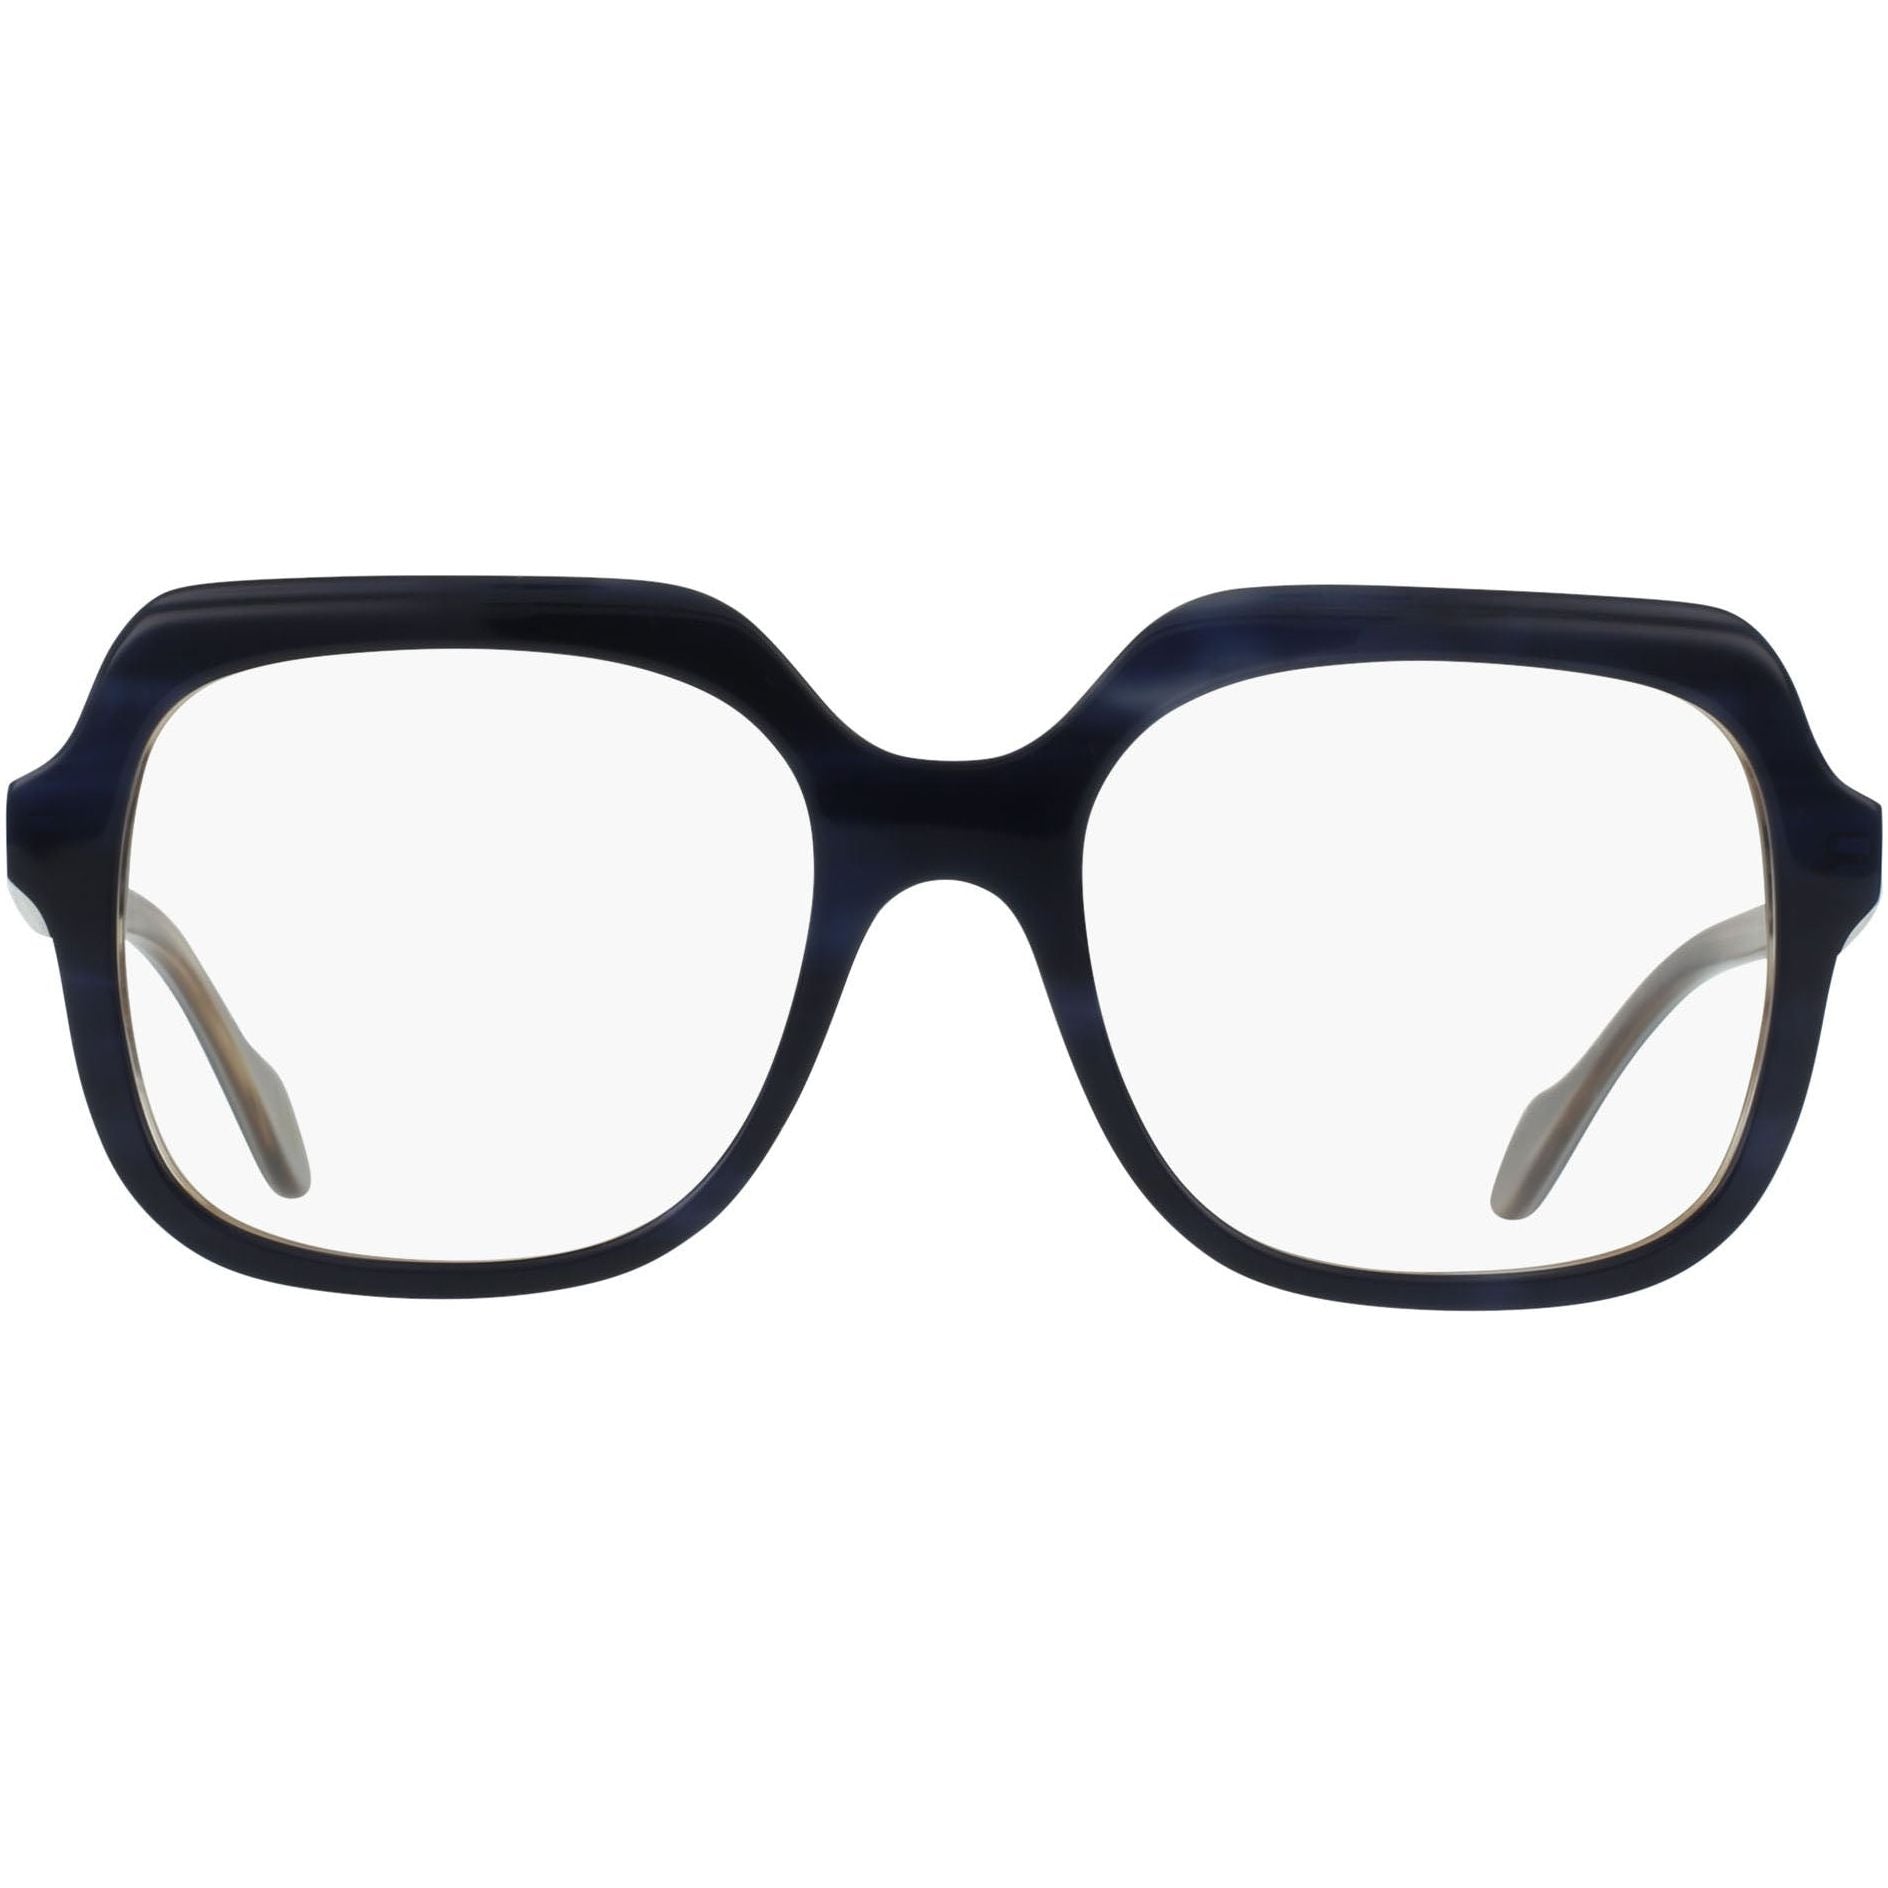 Prince Rectangular Frame in Steel Illusion Eyeglasses High End Designer Prescription Glasses Blue Light - Vint & York